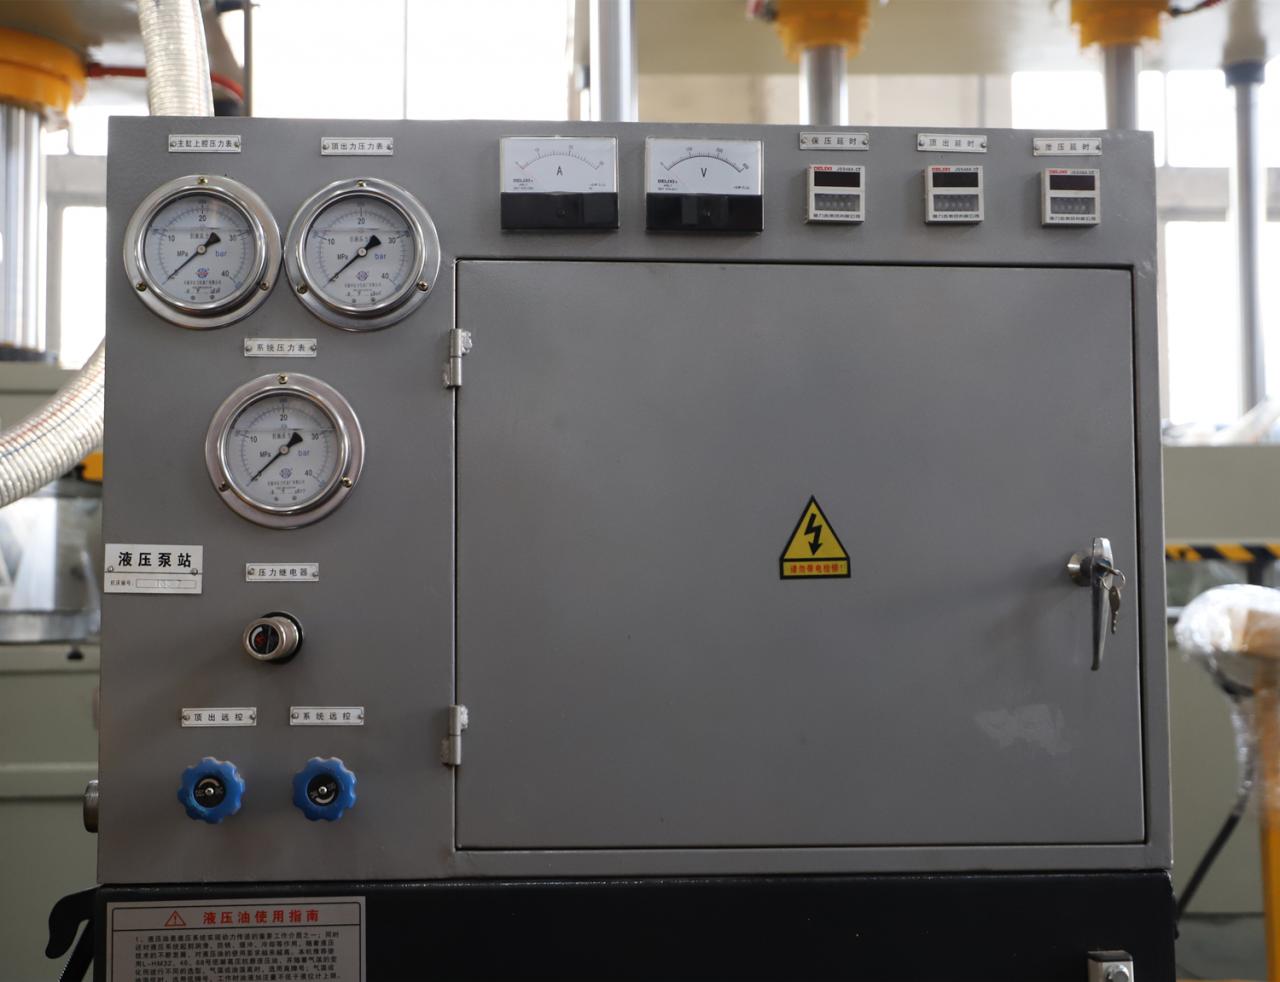 Hot Plate Hydroforming 100 Ton Stamping Machine ເຄື່ອງກົດໄຮໂດລິກ